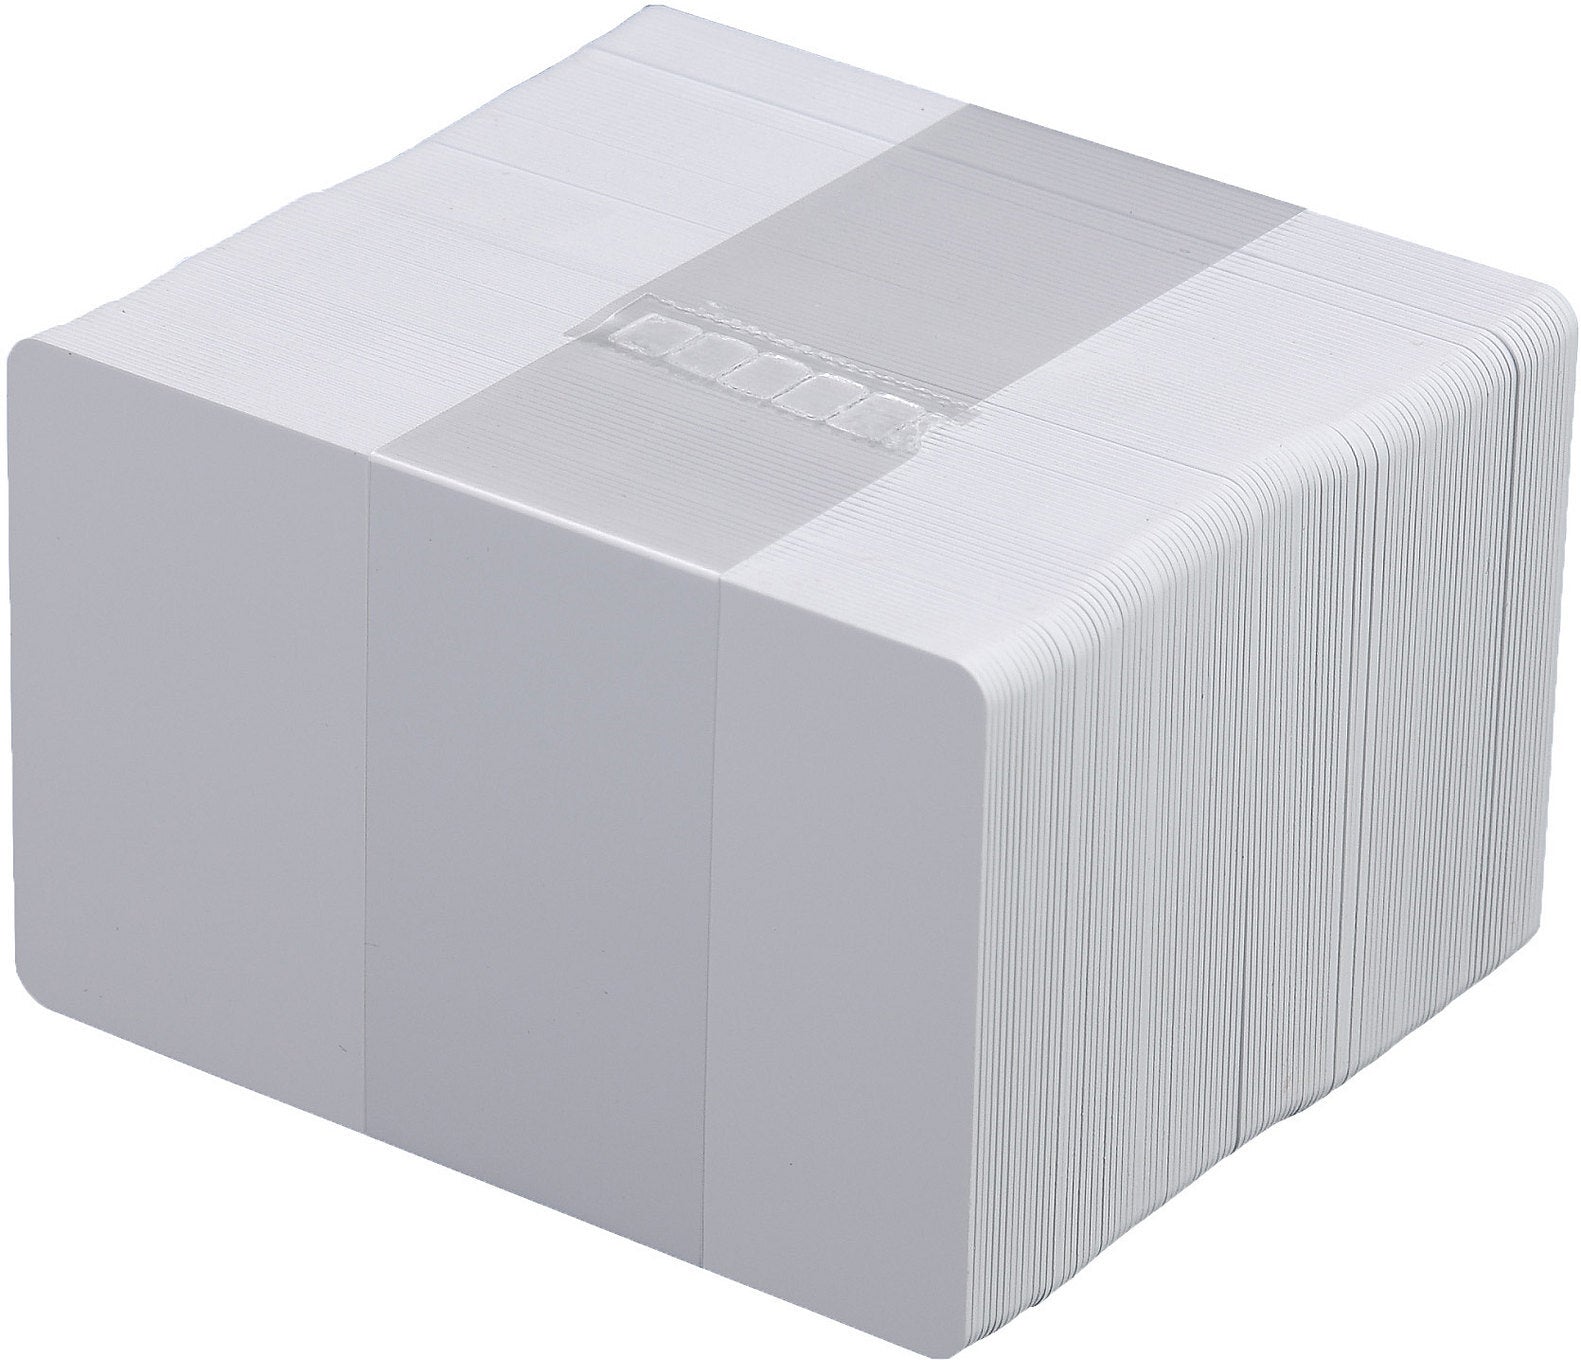 Blank White PVC Plastic ID Cards 760 micron | SPLIT PACKS - 500